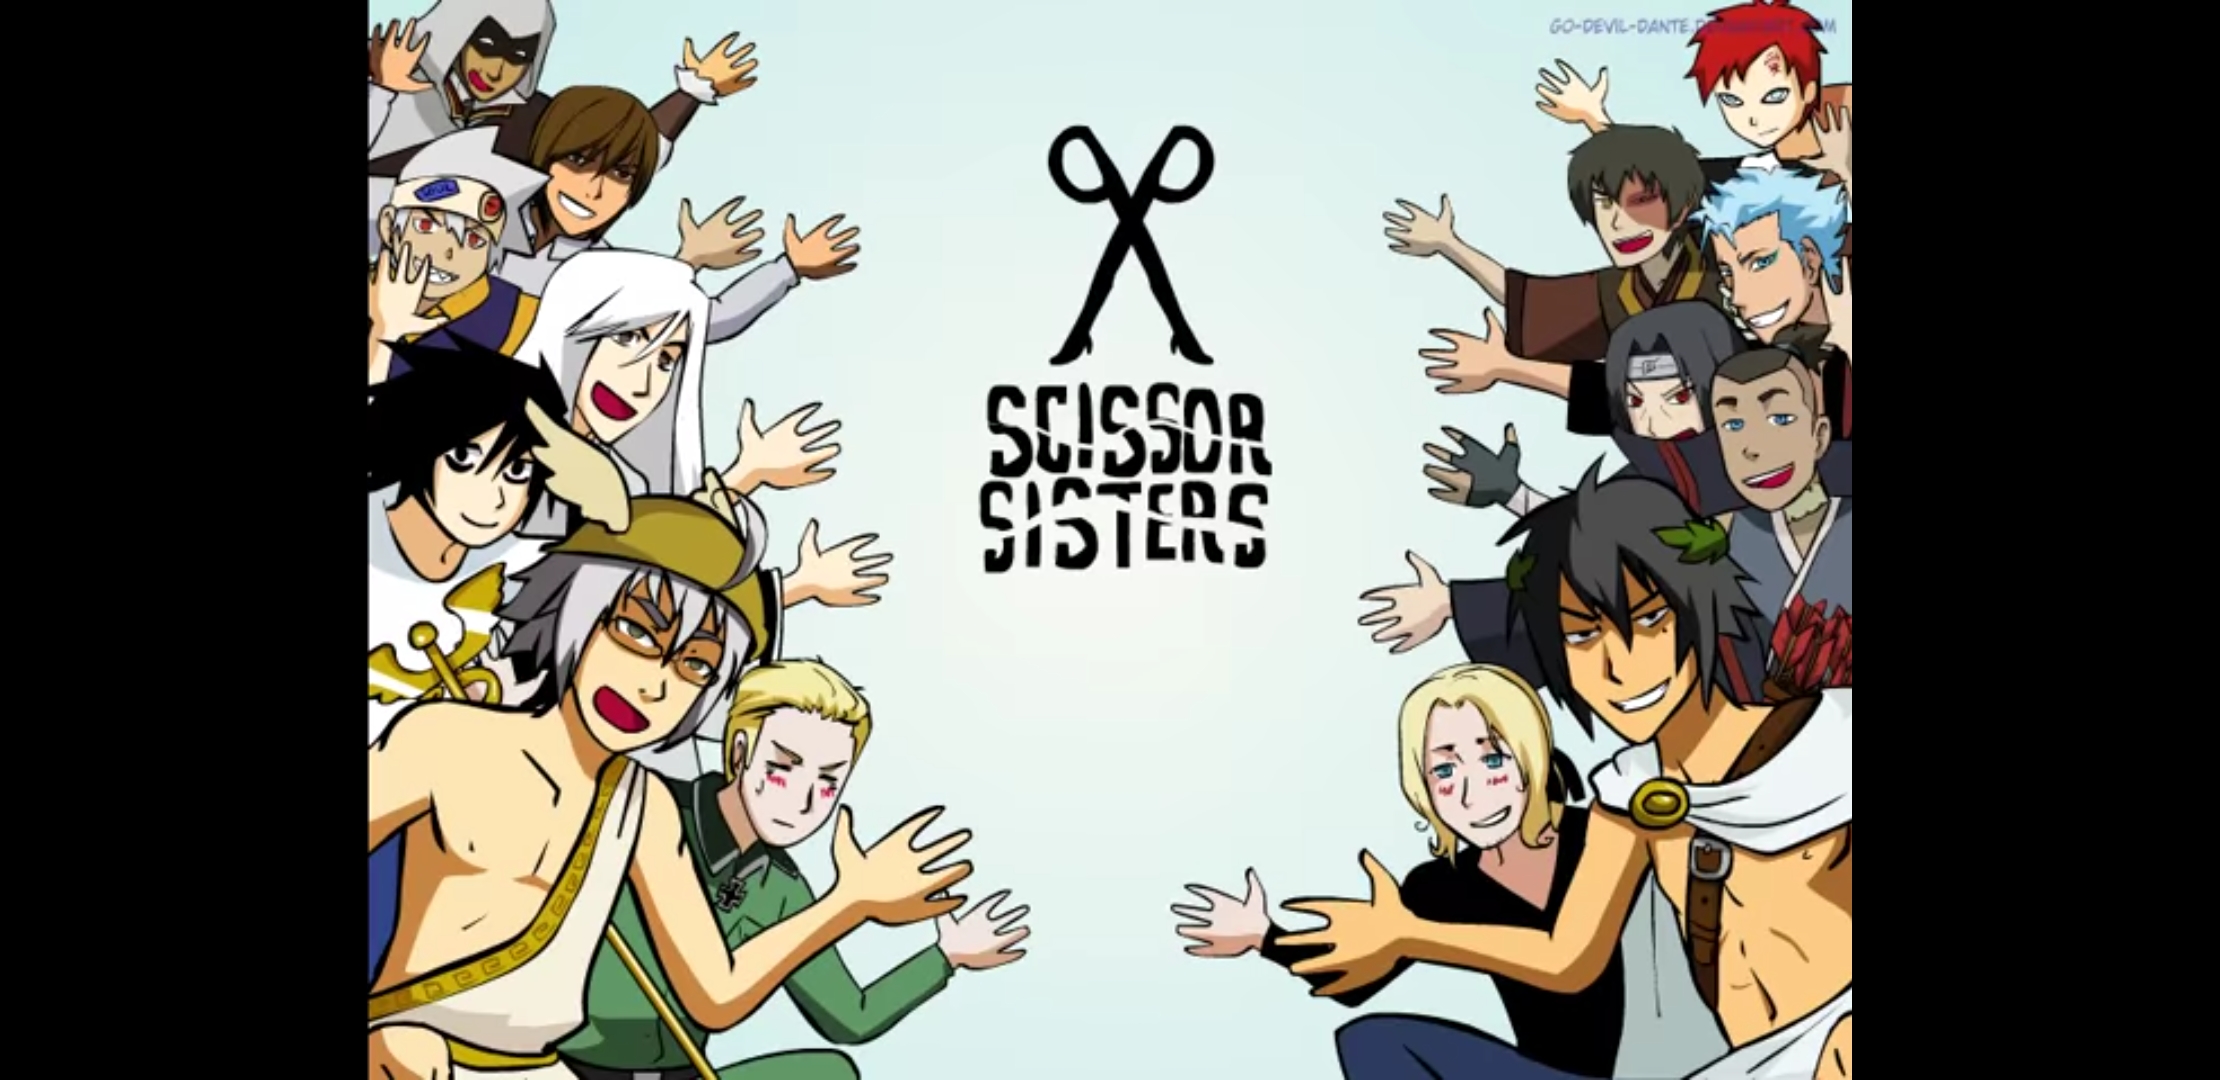 Scissor sisters i can t decide. I cant decide Scissor sisters. I can't decide. I can't decide перевод.